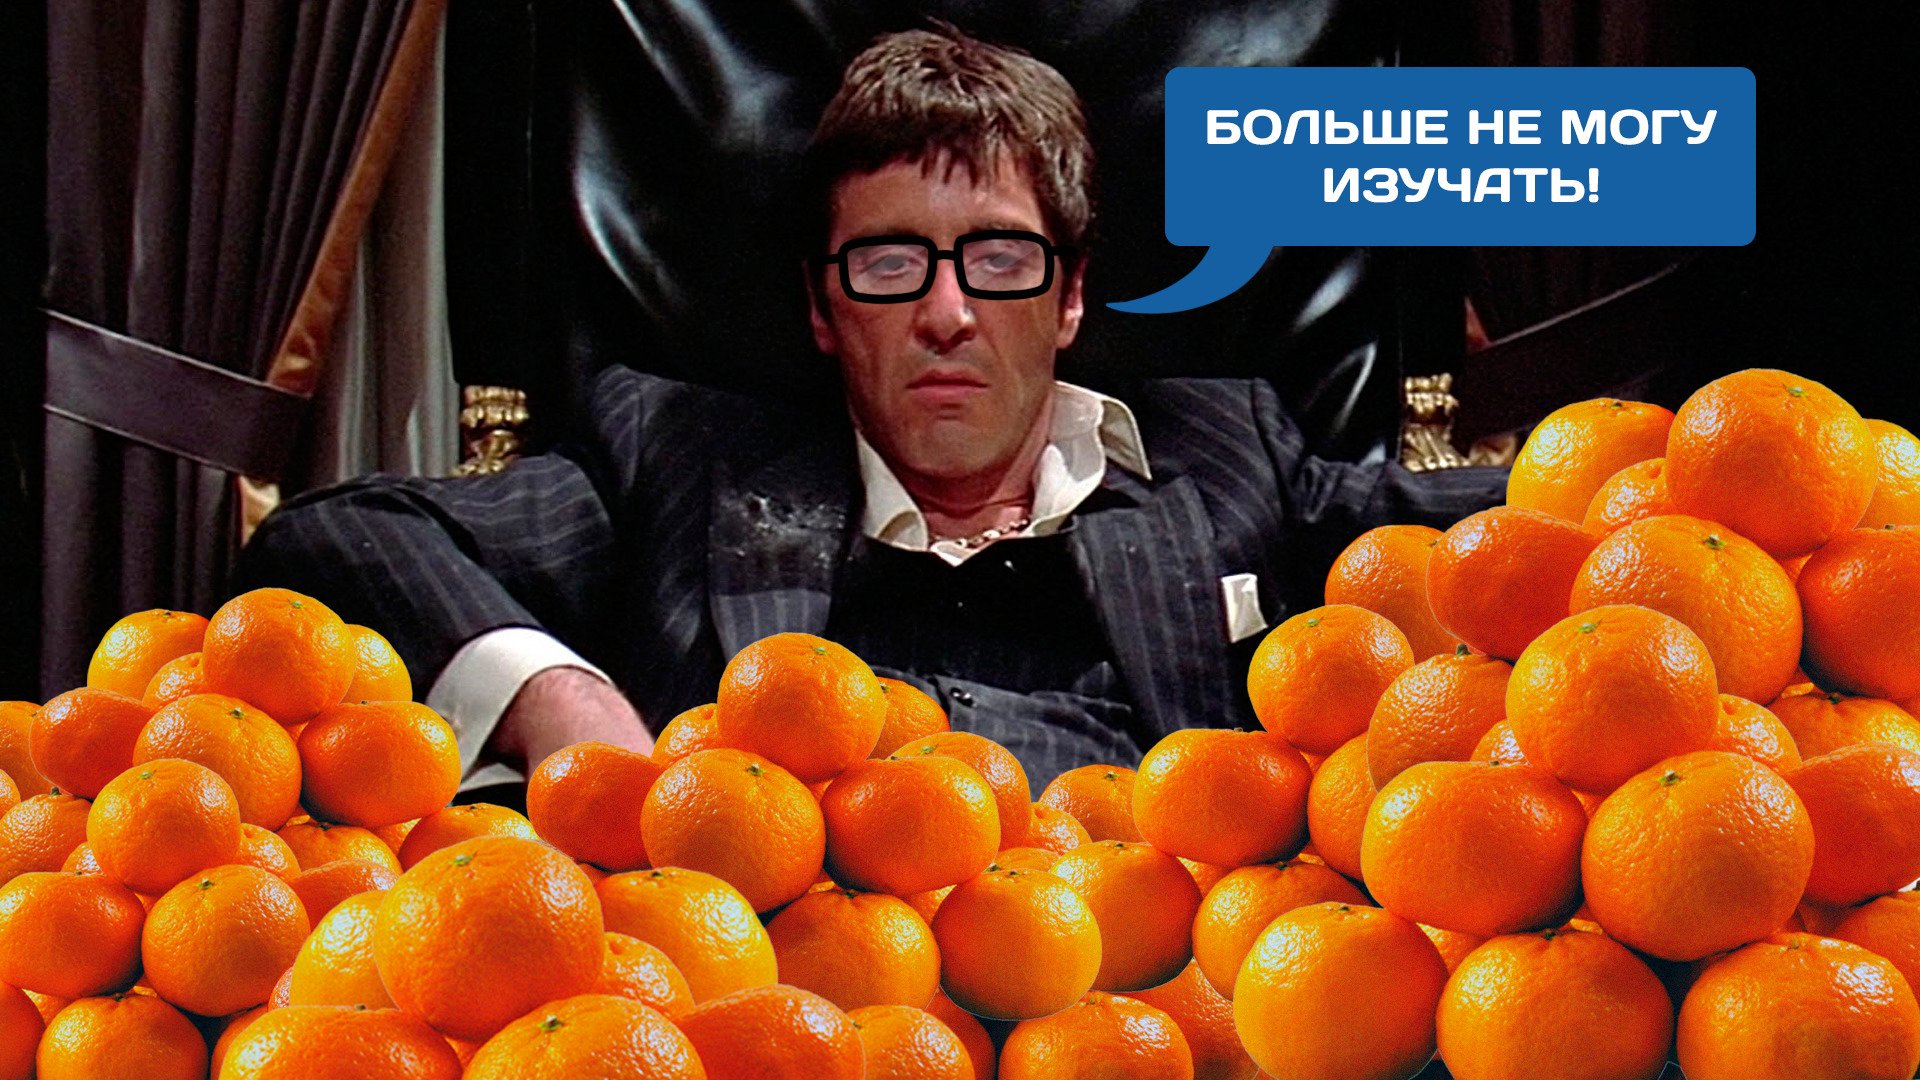 Реклама мандаринов. Тони Монтана с мандаринами. Человек-мандарин. Самые большие мандарины. Мандарины прикол.